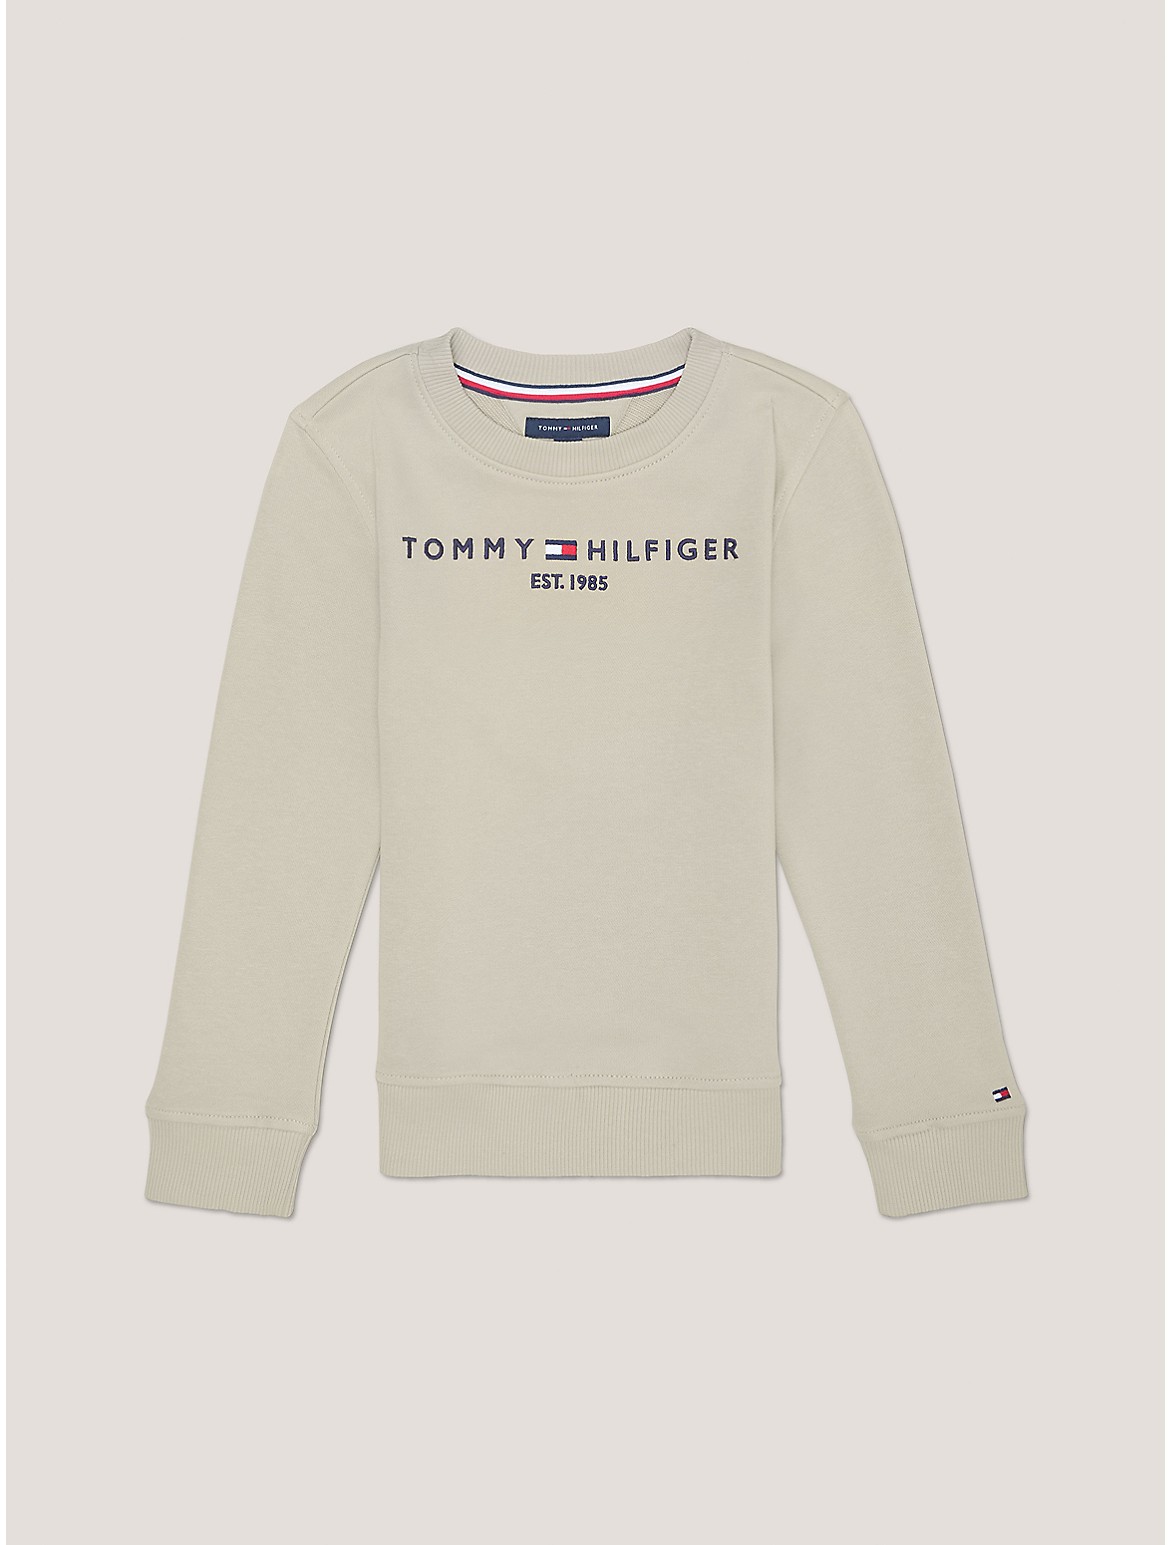 Tommy Hilfiger Boys' Kids' Tommy Logo Sweatshirt